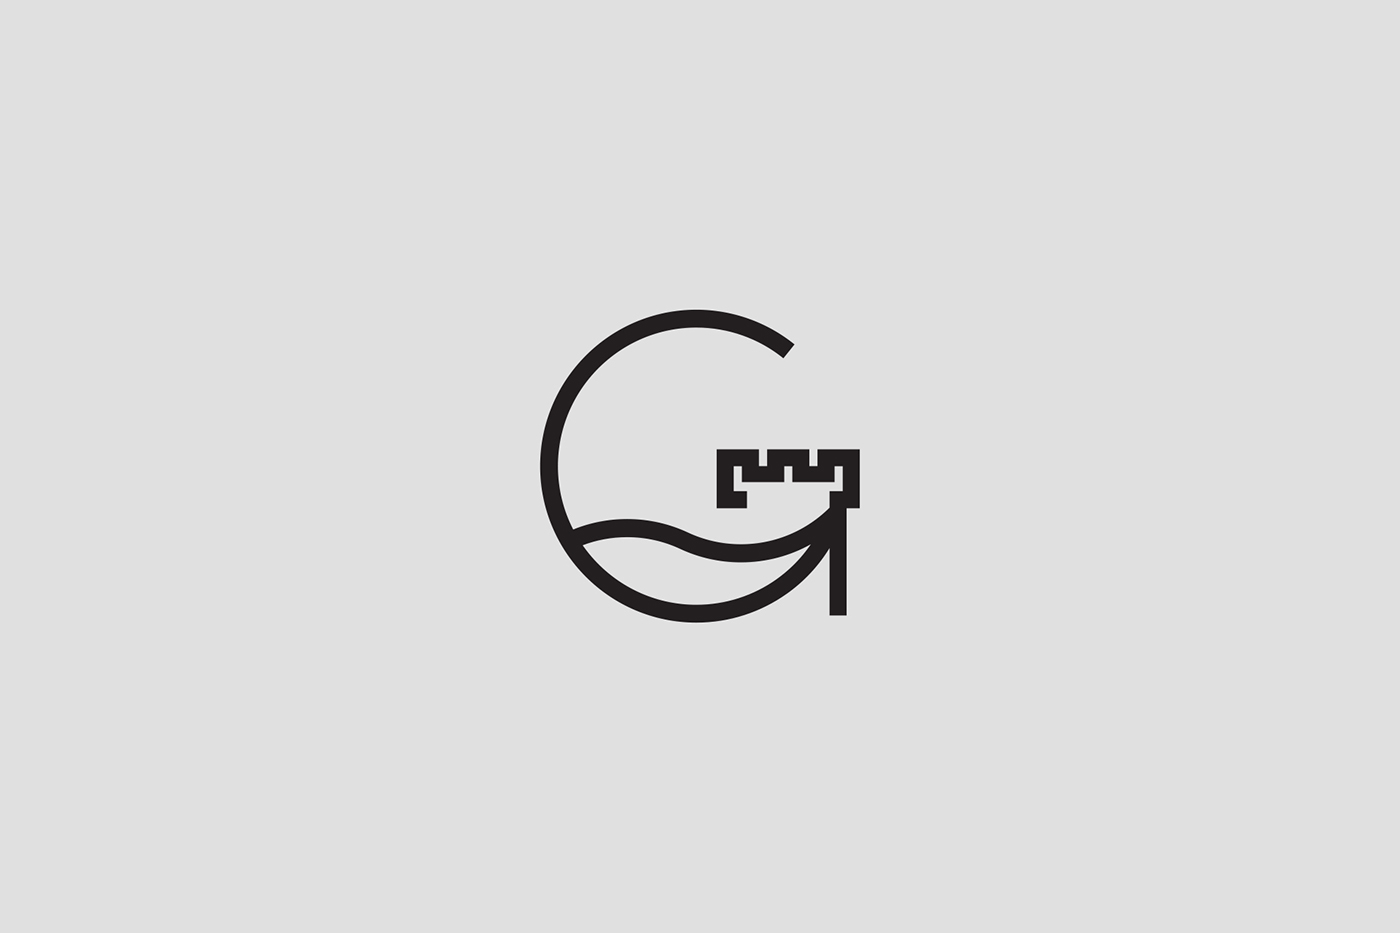 Gallaria logo design ILLUSTRATION  cursordesign summer Castle wave brand